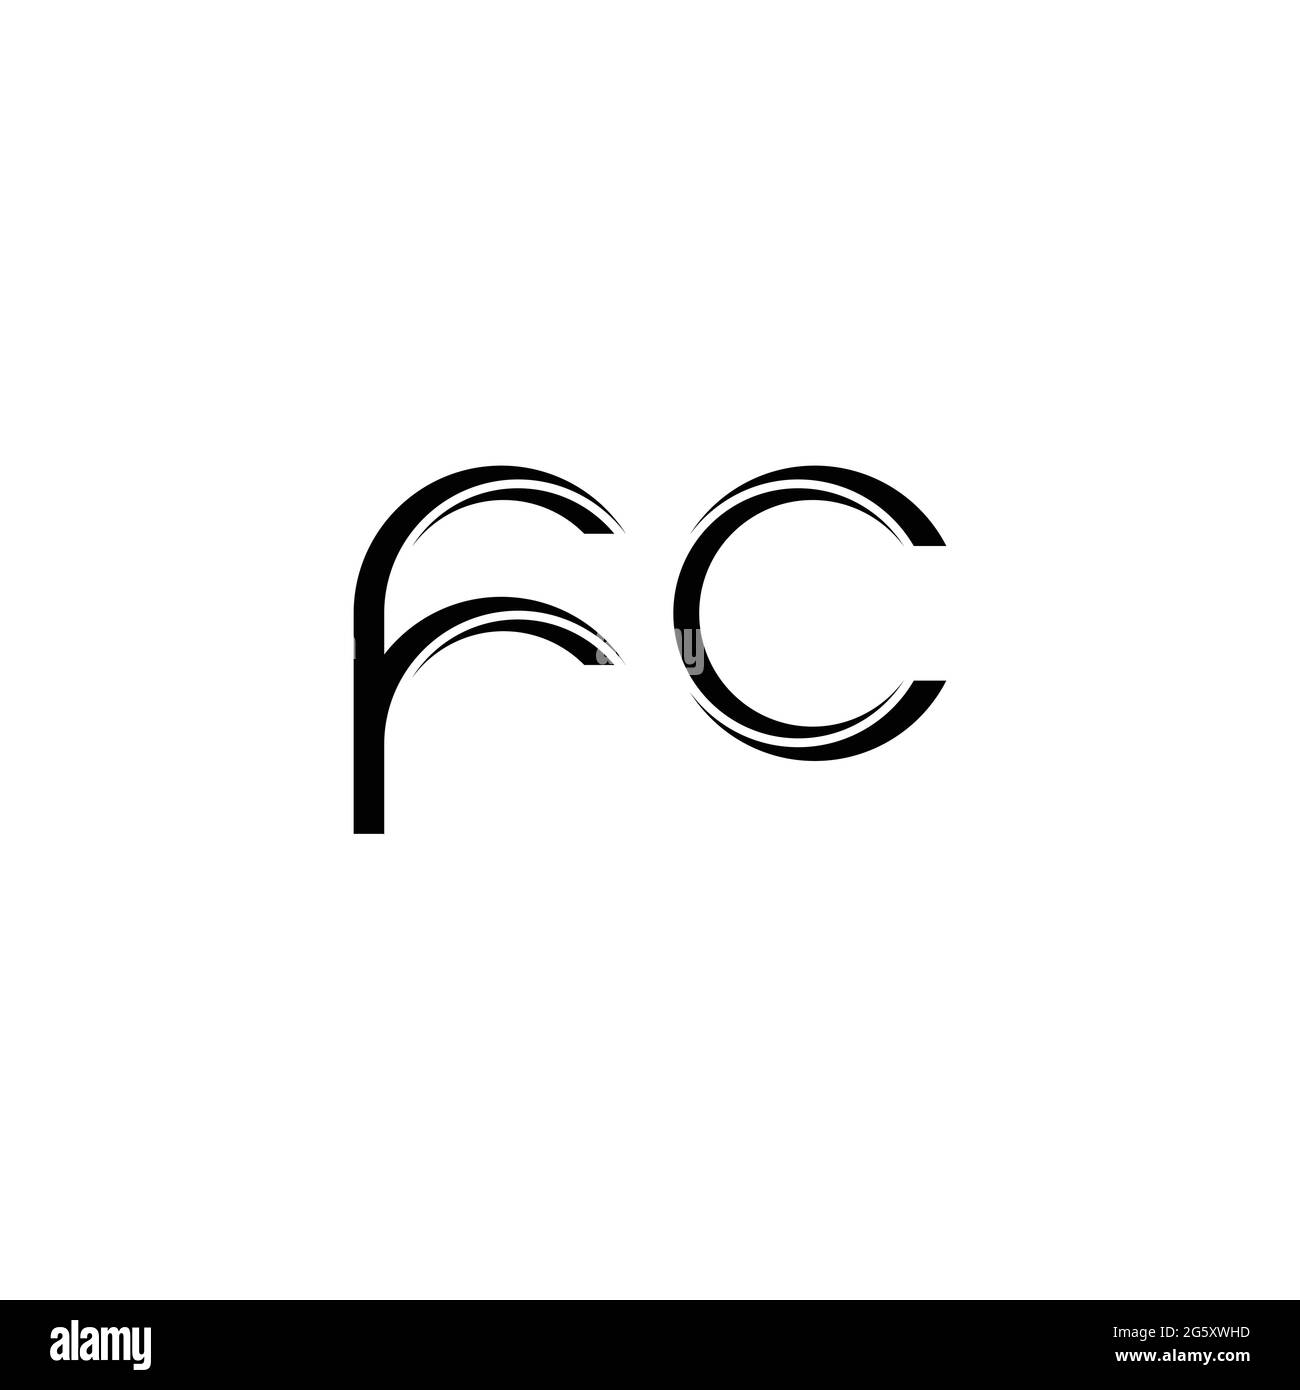 Monograma Con Logotipo Fc Con Plantilla De Diseño Moderno Redondeada En